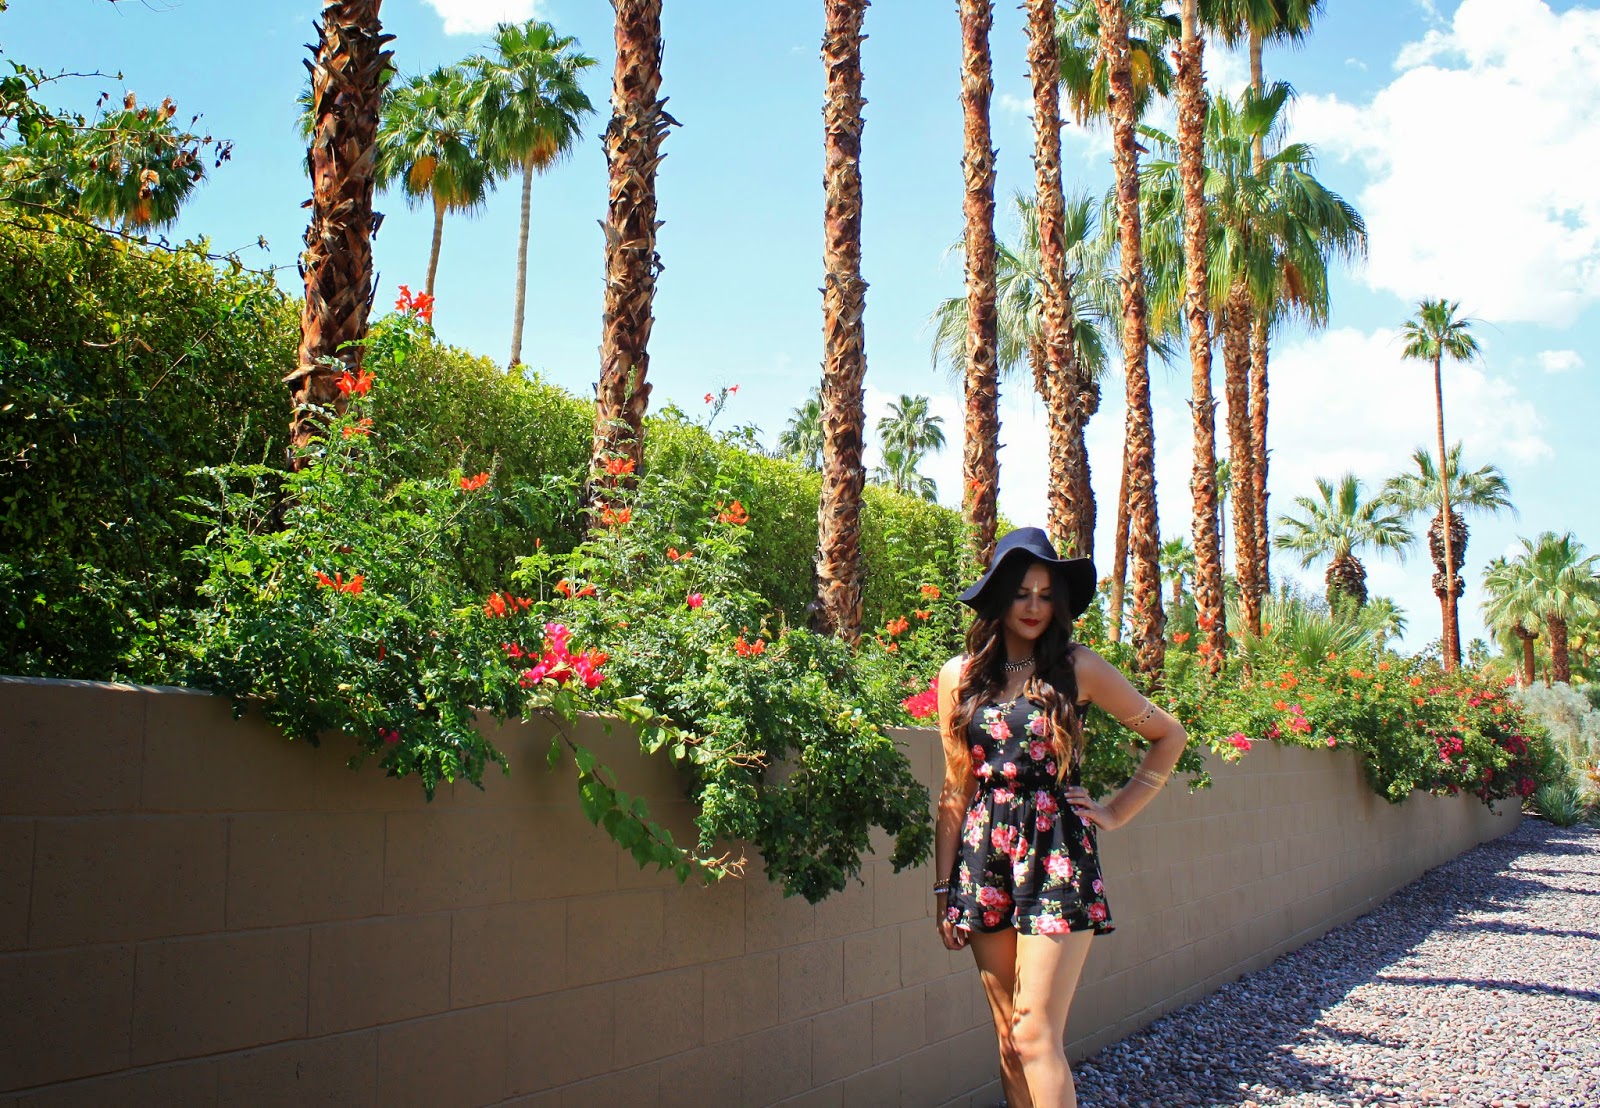 Blogger Mash Elle shares tips on Coachella - What to Wear to Coachella by popular Orlando fashion blogger, Mash Elle